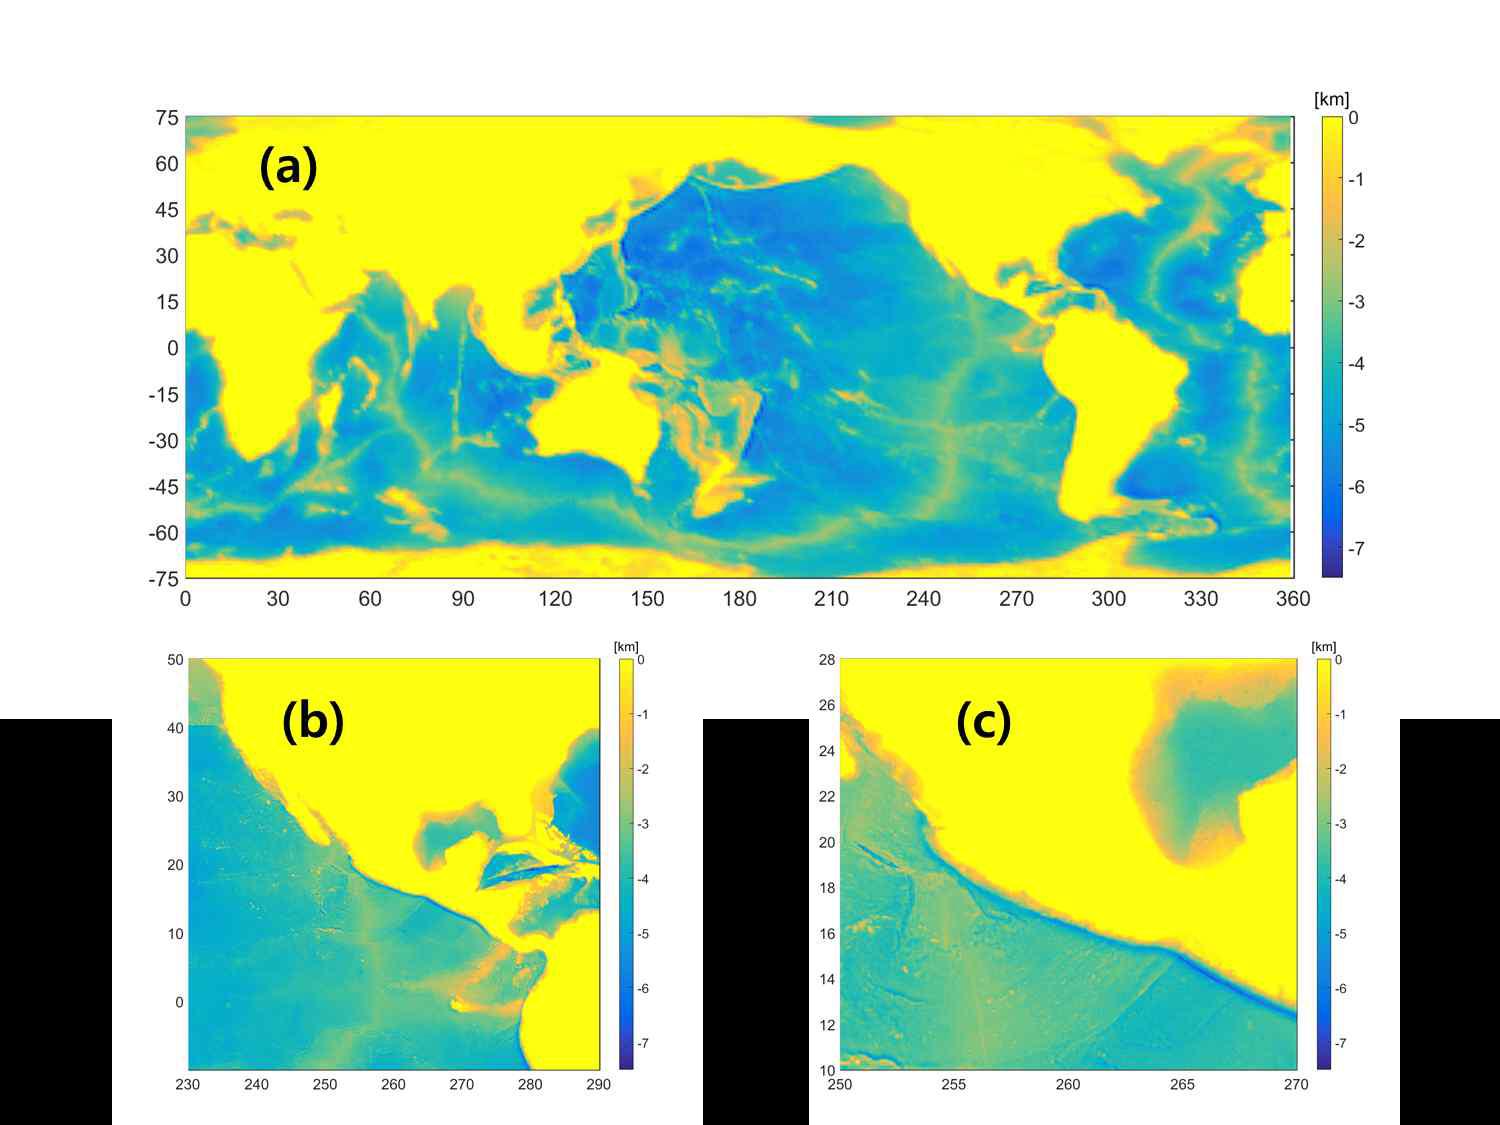 (a)전 지구, (b)동태평양 (c)미국 서쪽 해안 영역으로 파랑모델에서 사용된 도메인.